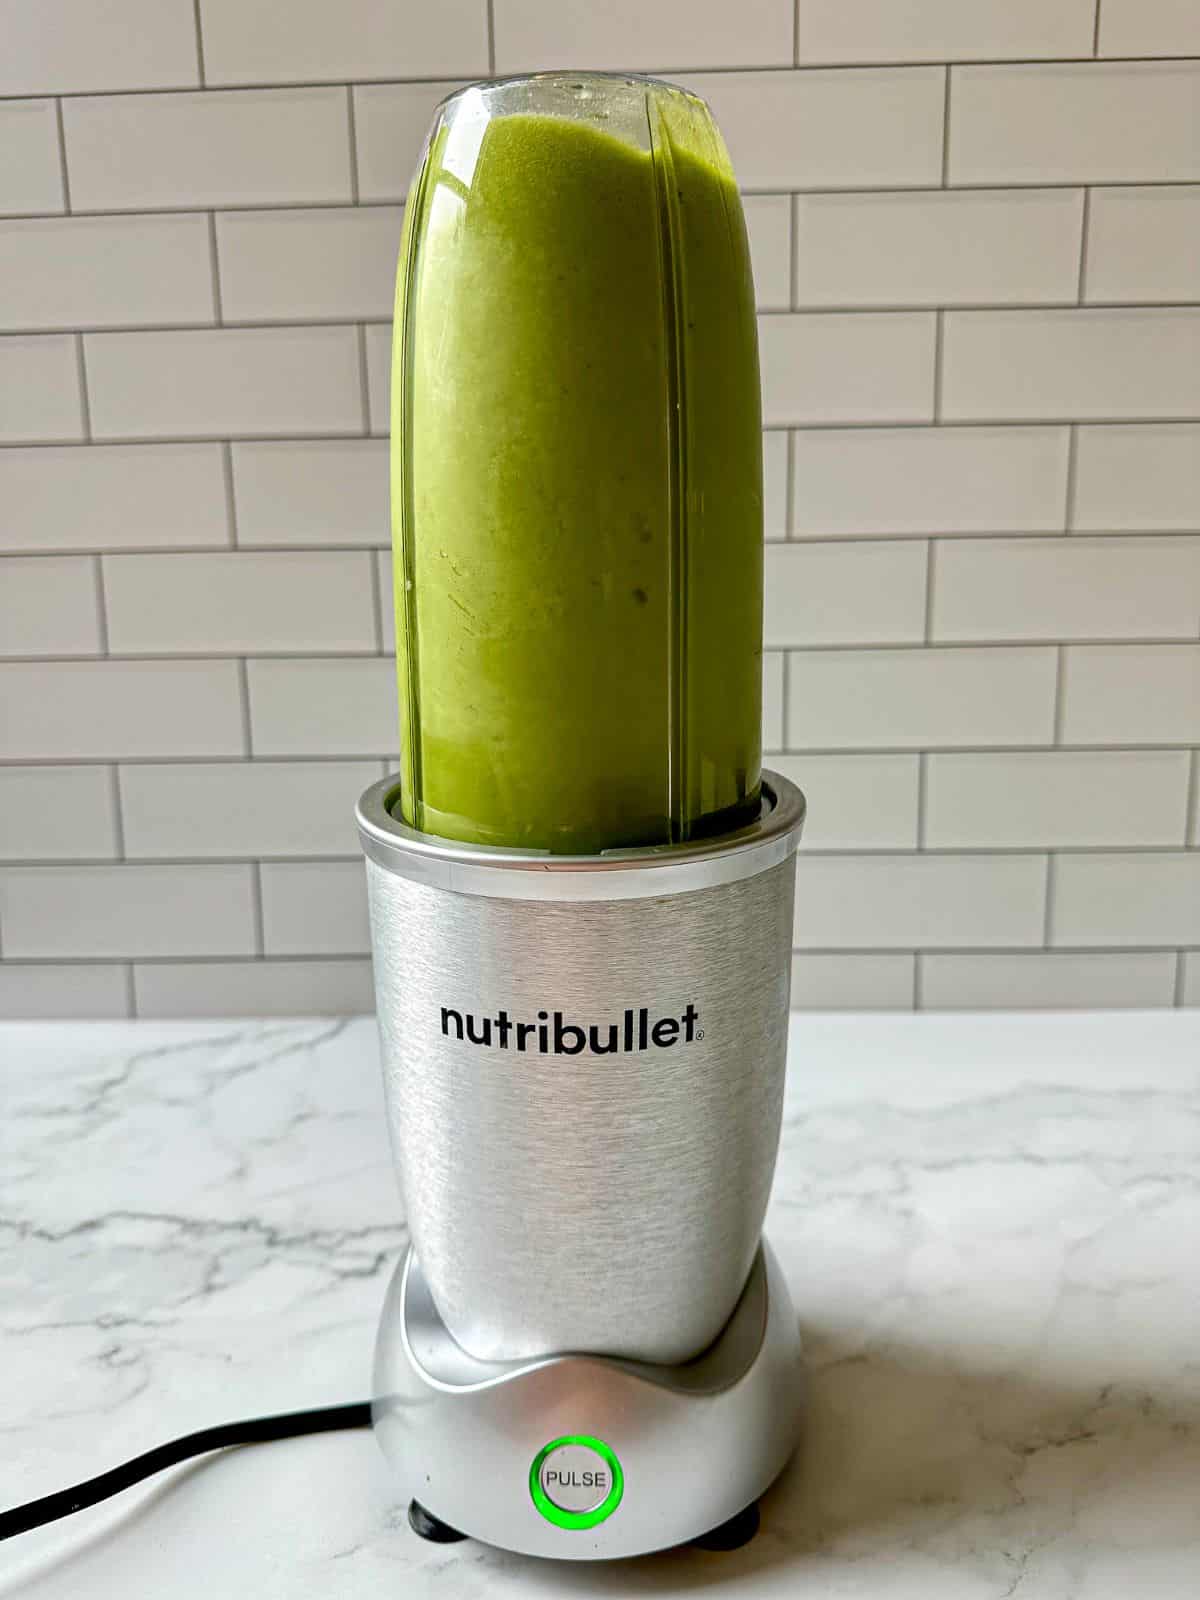 A green smoothie blending in a blender.